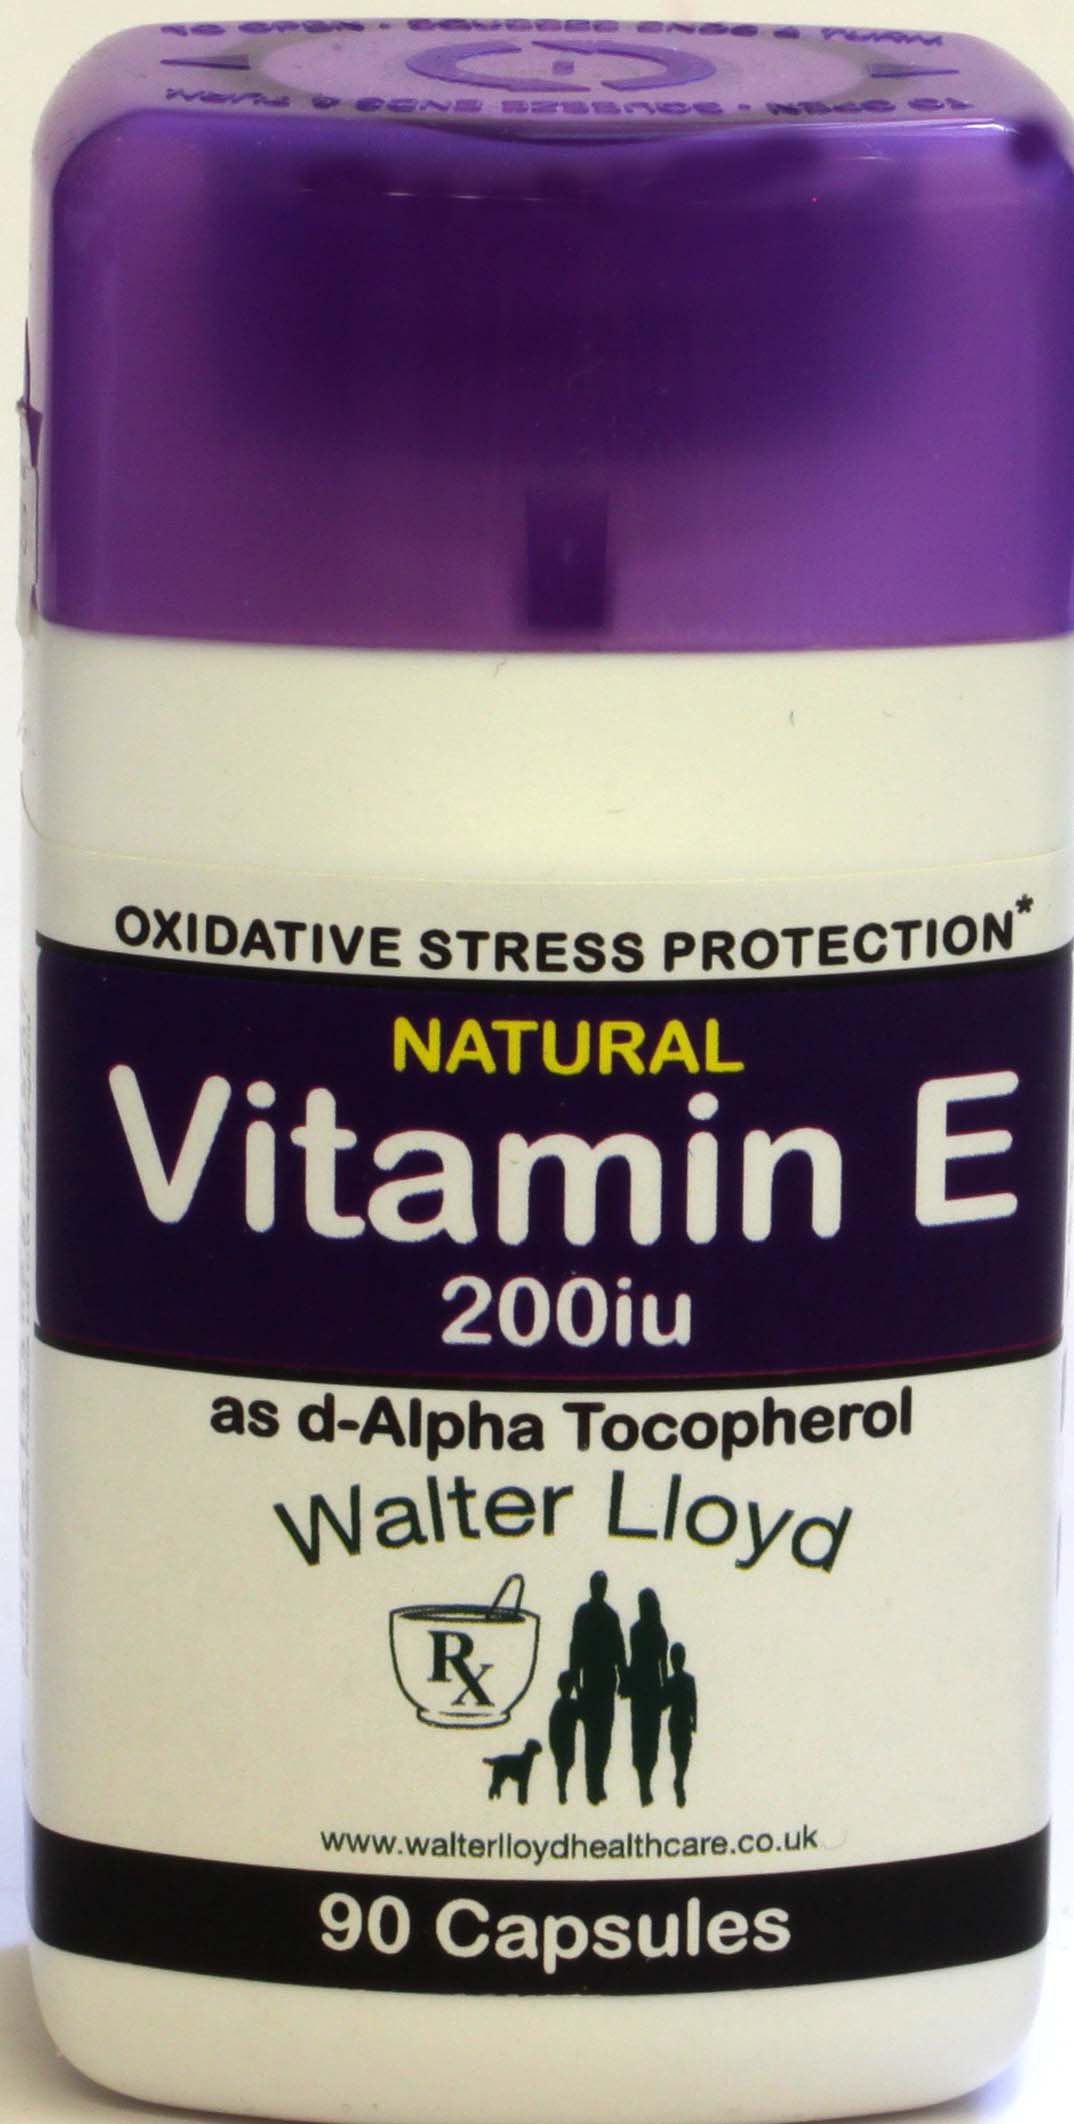 Vitamin E 200iu - 90 capsules